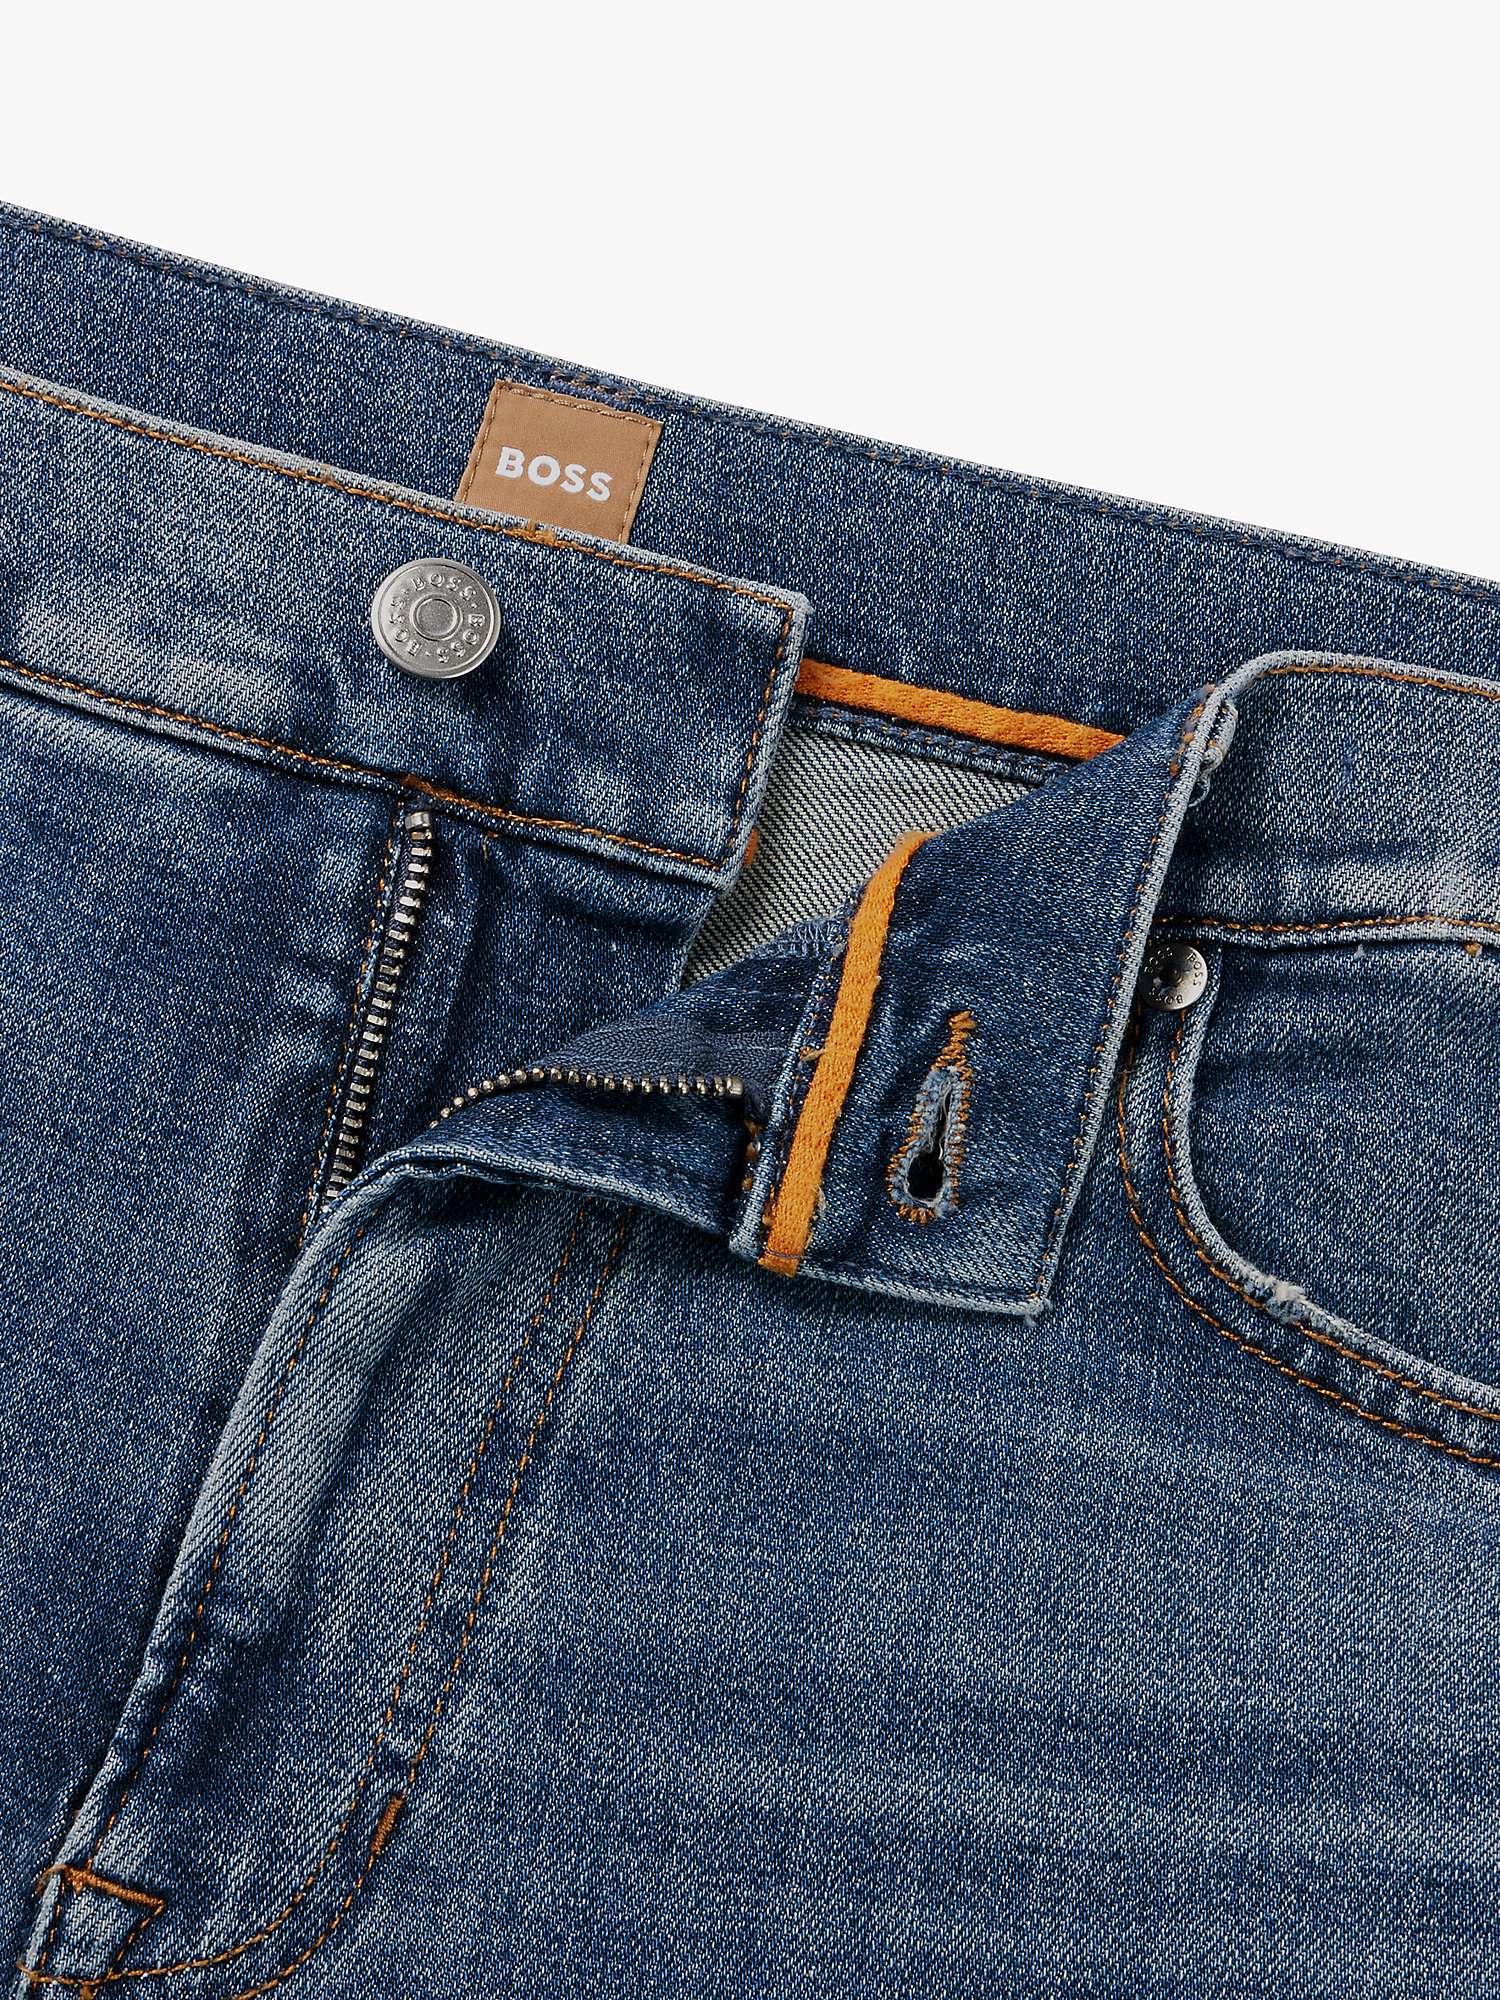 Buy BOSS Cotton Blend Slim Jeans, Medium Blue Online at johnlewis.com